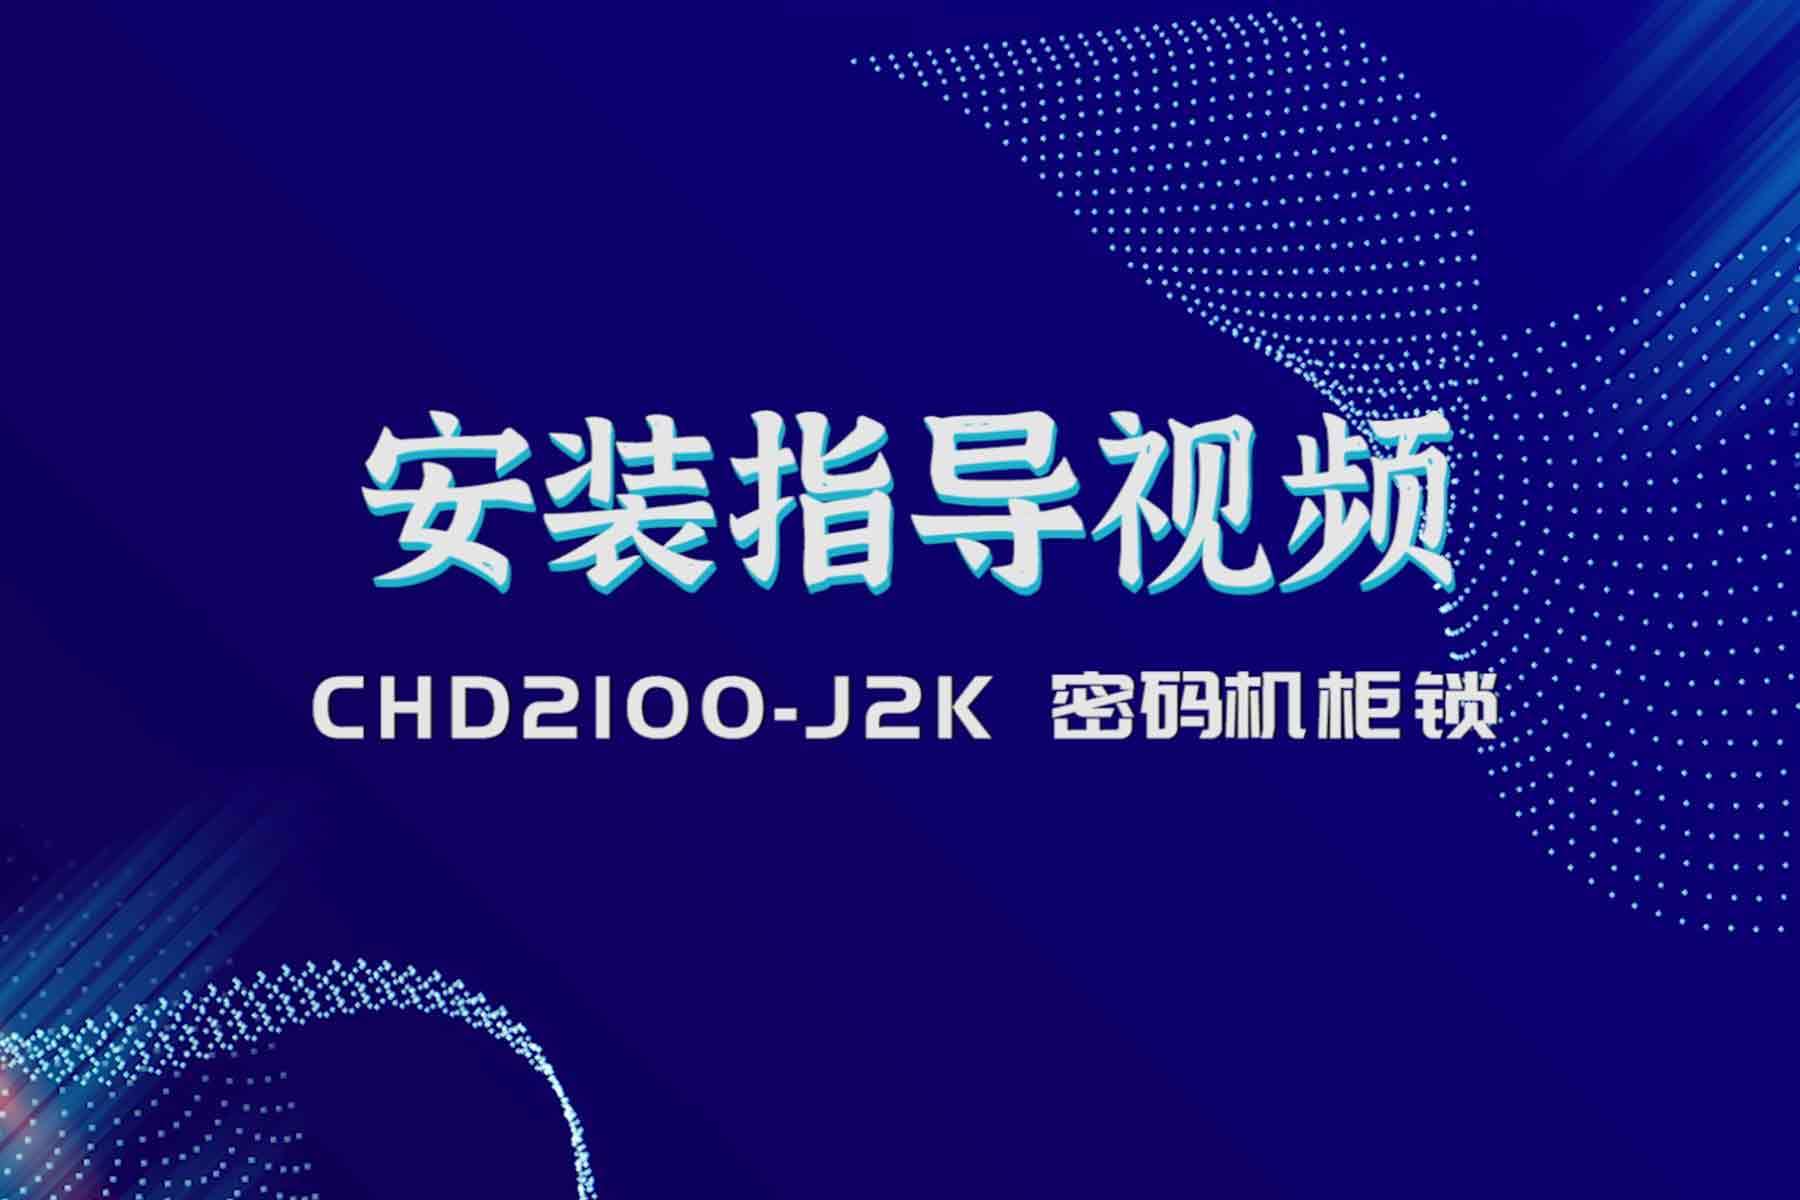 2100-J2K安裝指導視頻